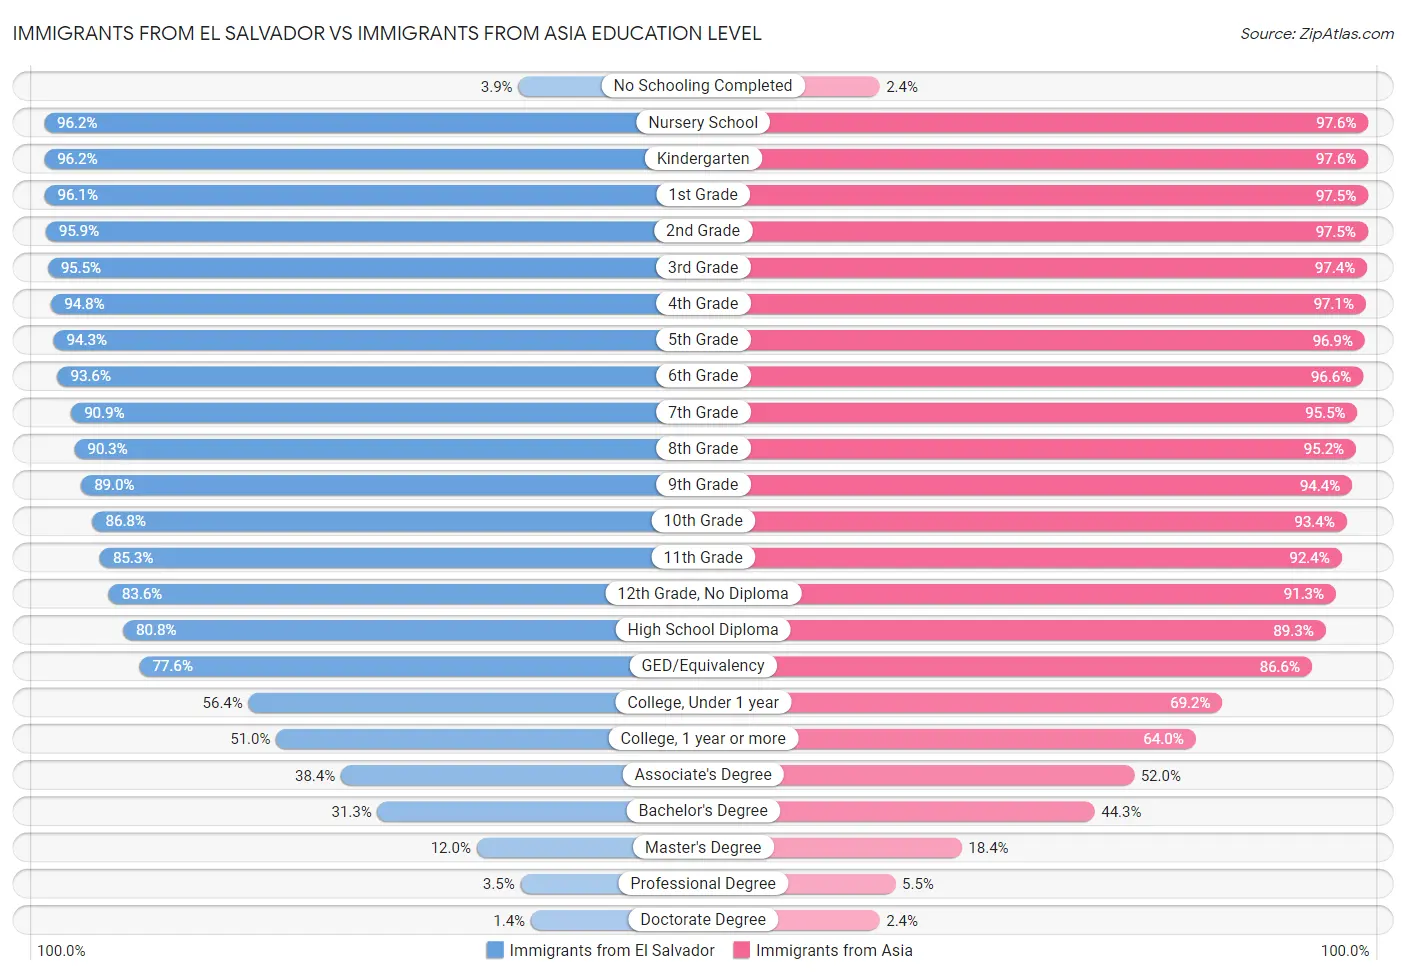 Immigrants from El Salvador vs Immigrants from Asia Education Level